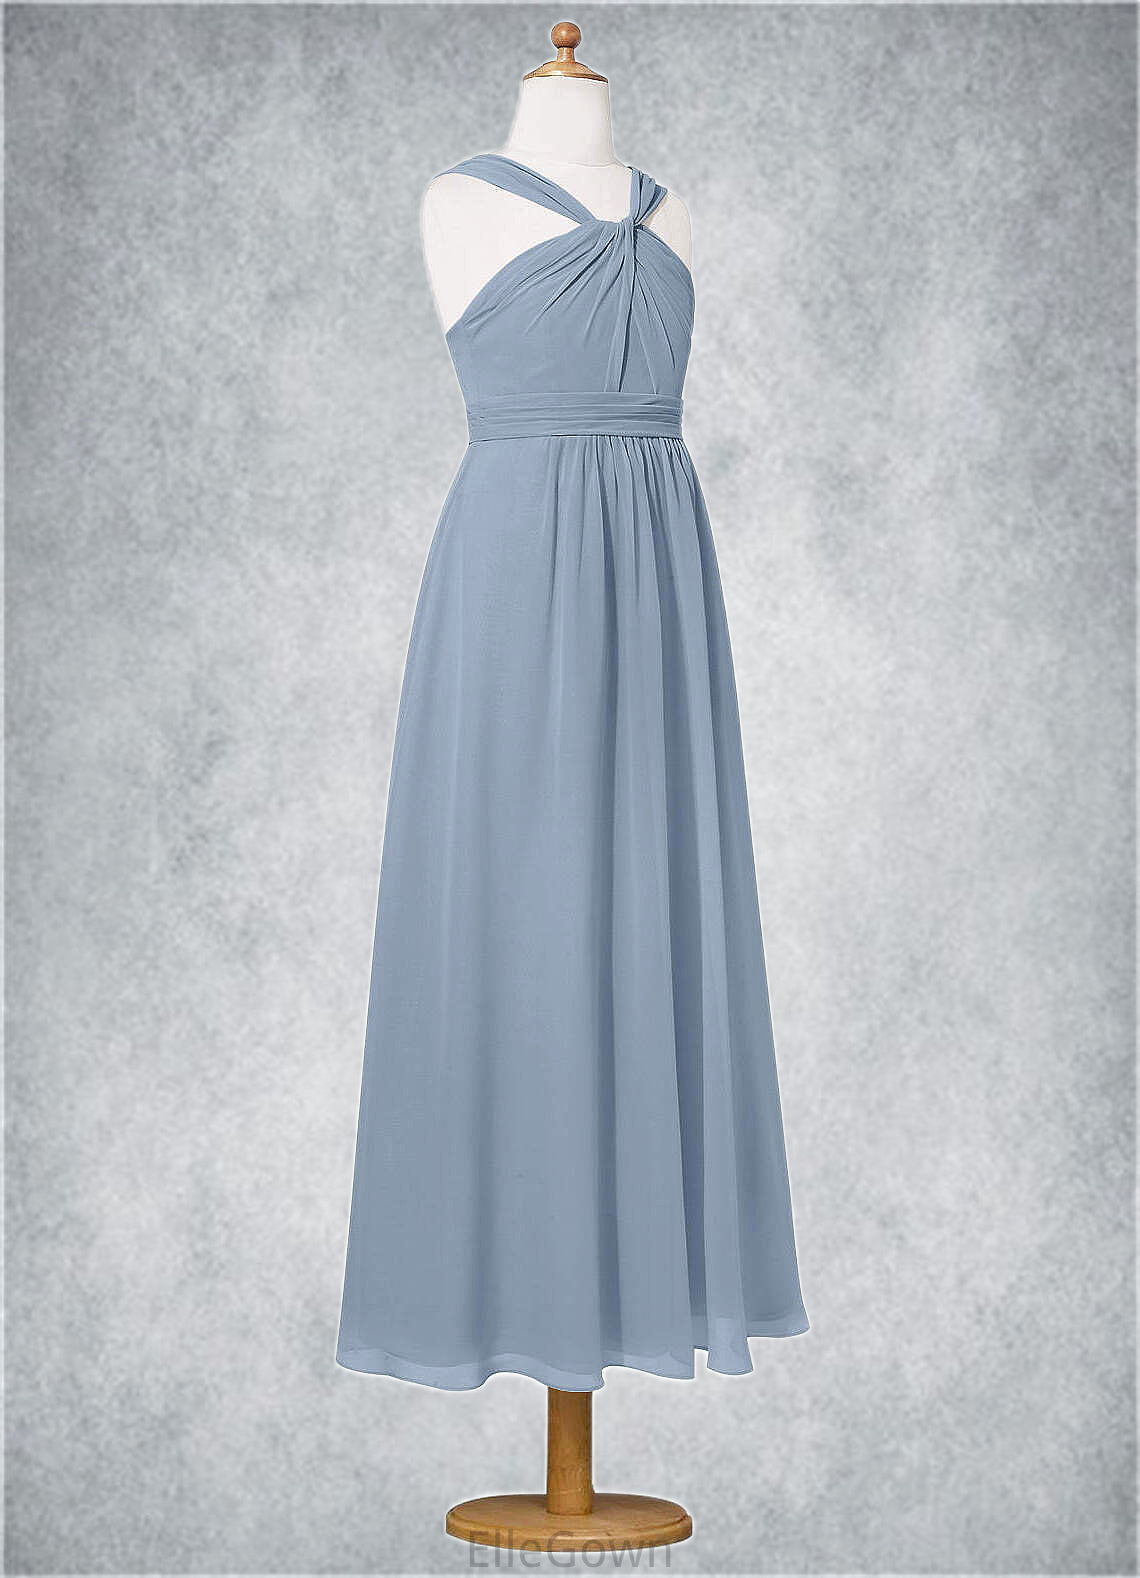 Raelynn A-Line Pleated Chiffon Ankle-Length Junior Bridesmaid Dress dusty blue DEP0022866